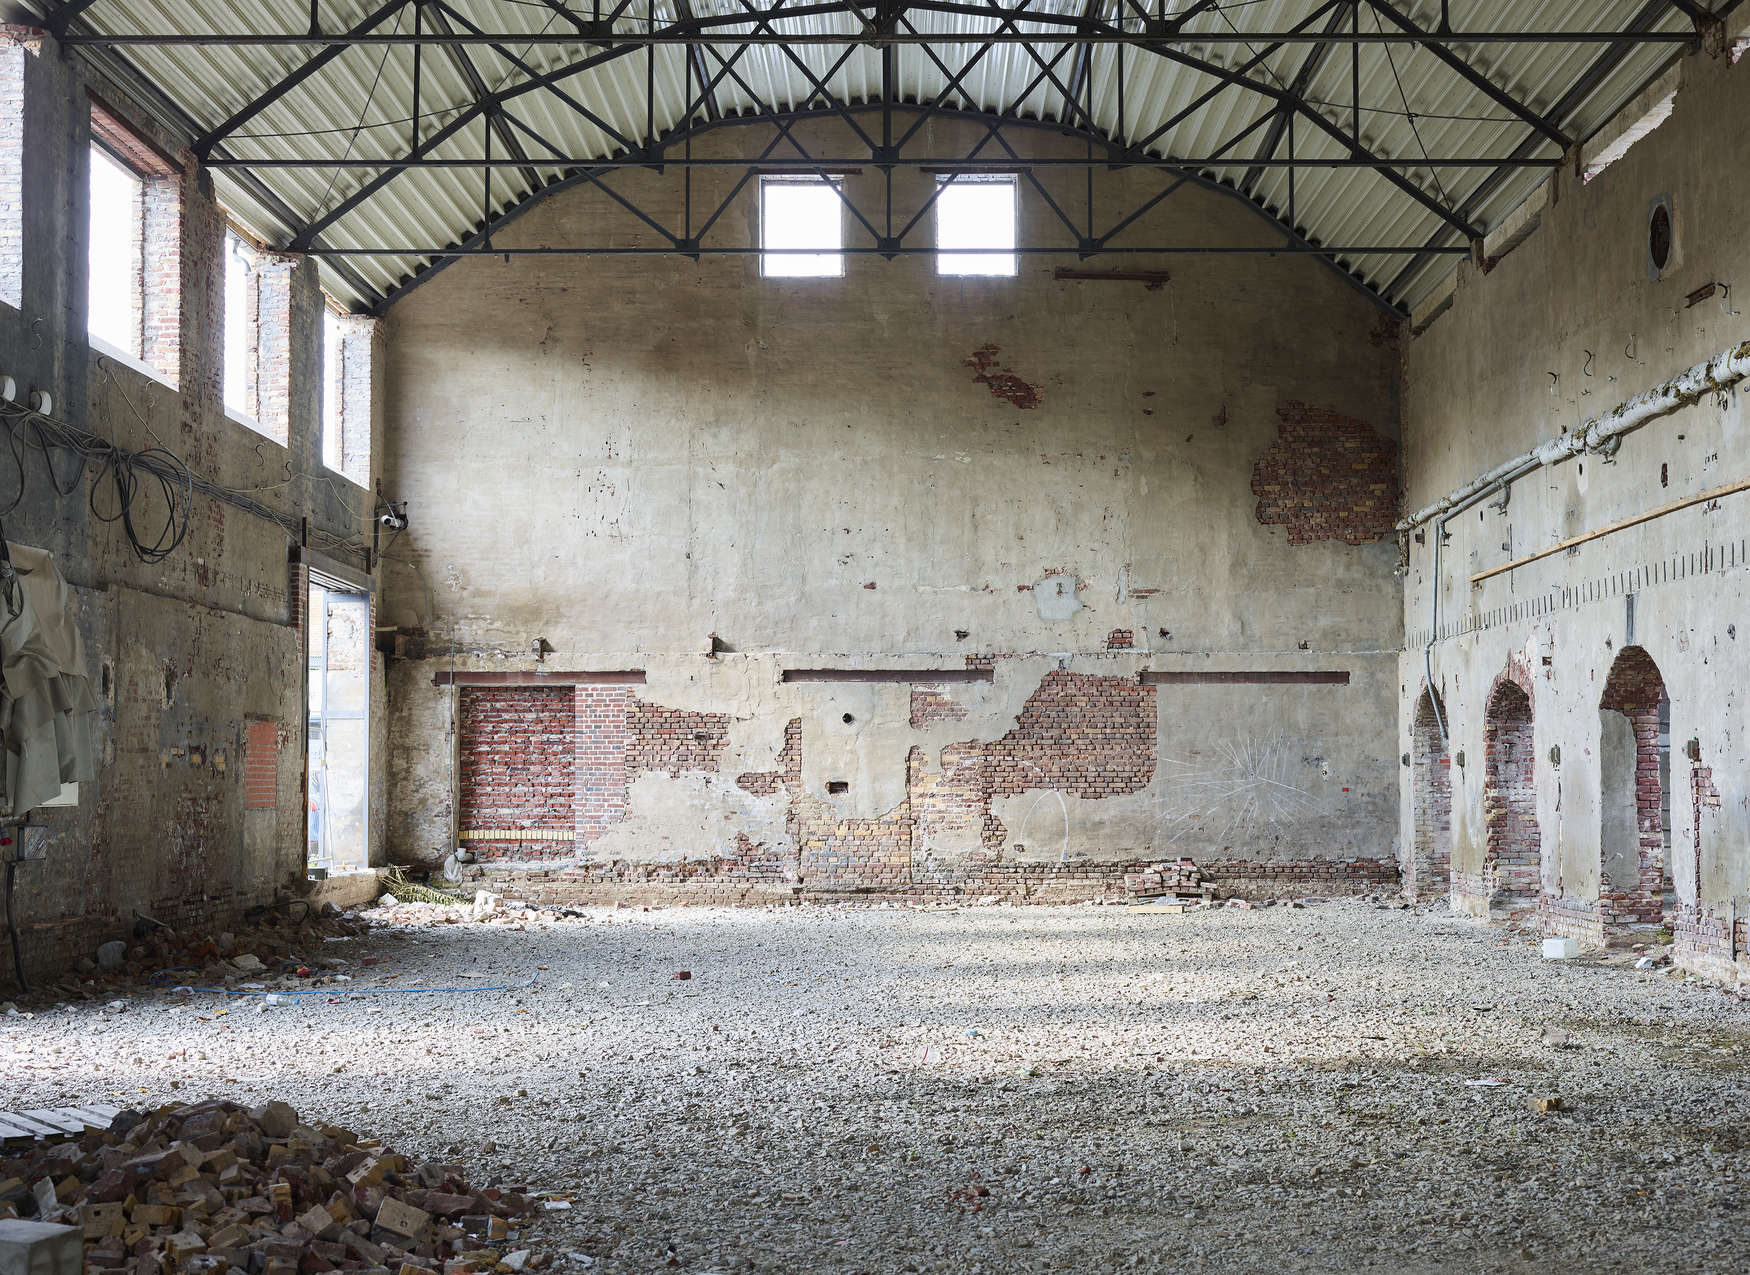             Fotomurali con sala industriale abbandonata - Beige, Marrone
        